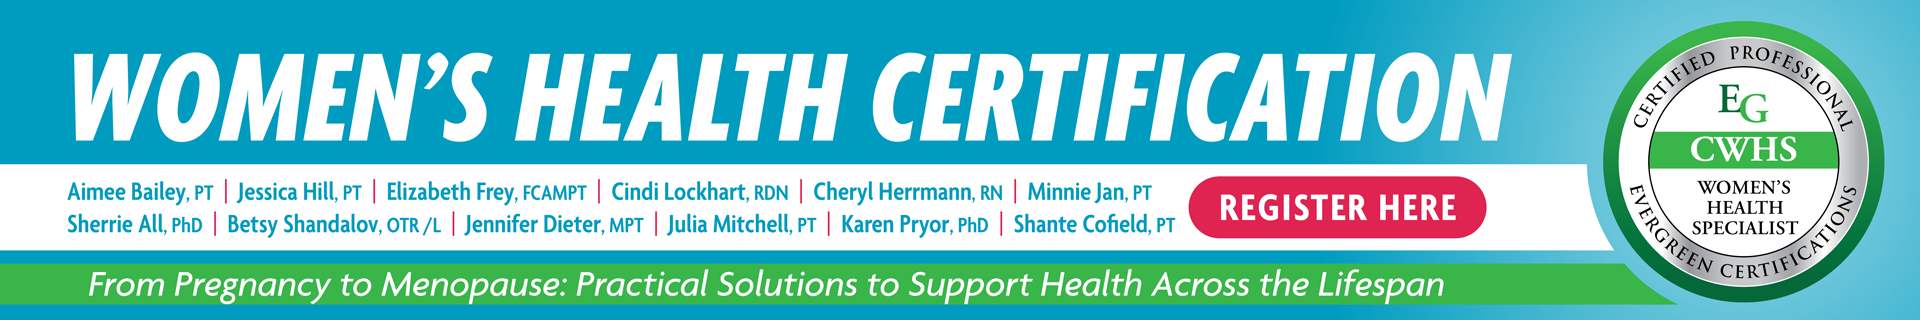 Women's Health Certification